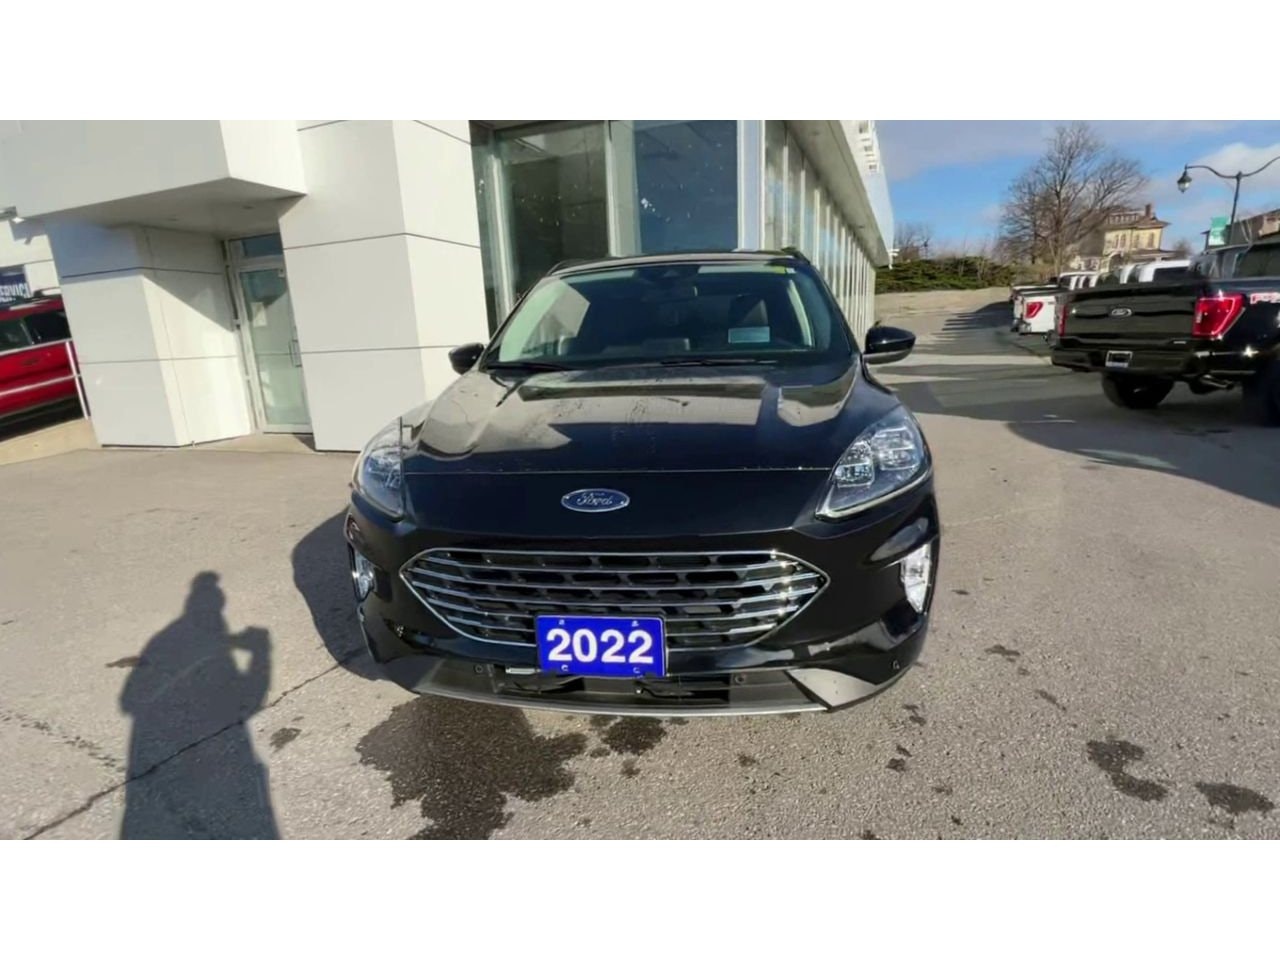 2022 Ford Escape - 20562 Full Image 3